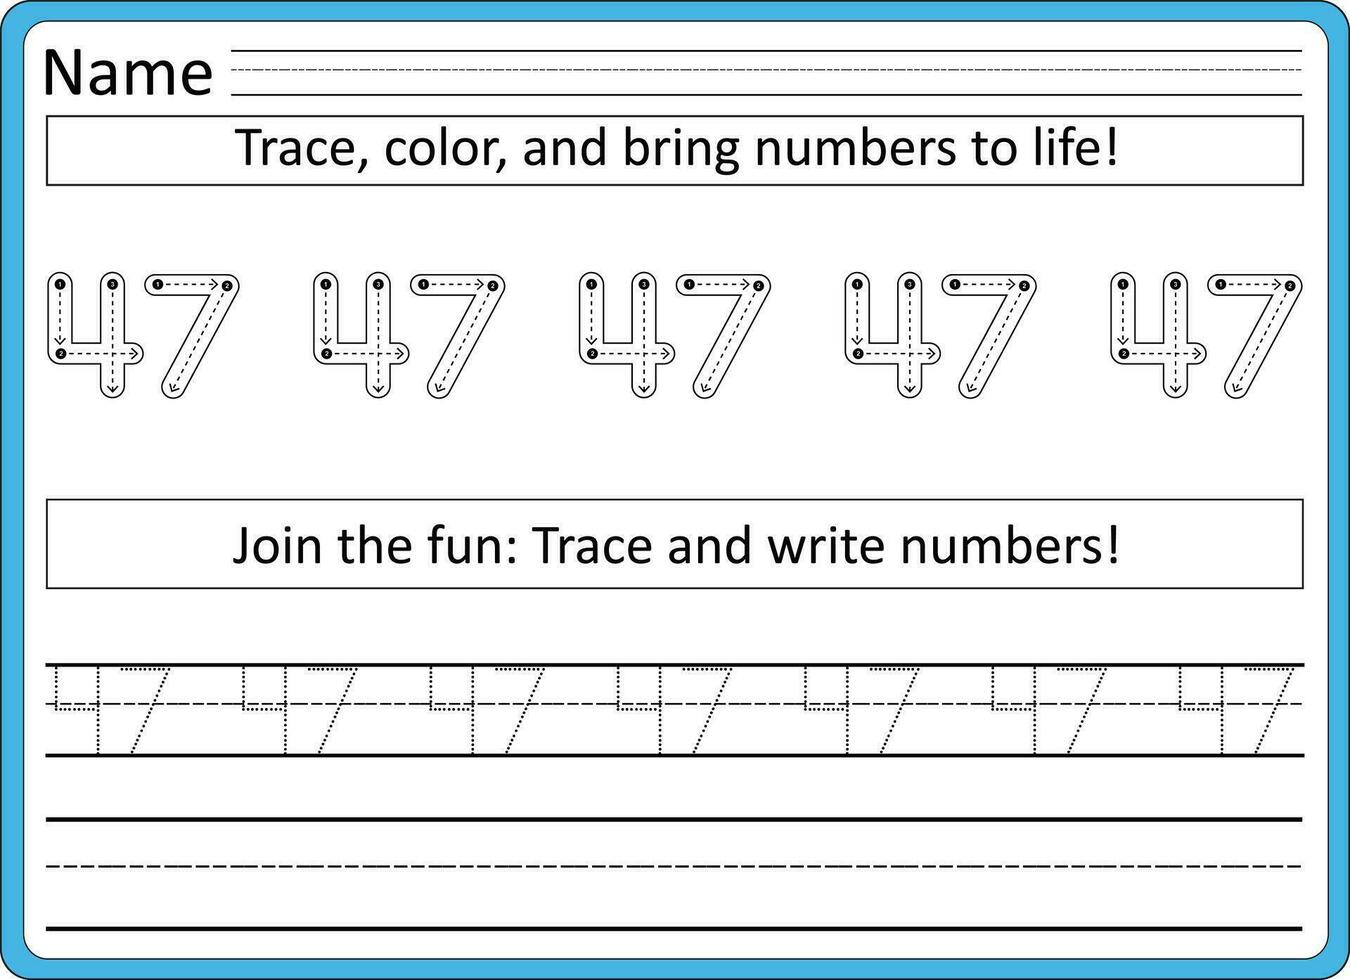 Rückverfolgung Arbeitsblätter zum Kinder Handschrift trainieren vektor